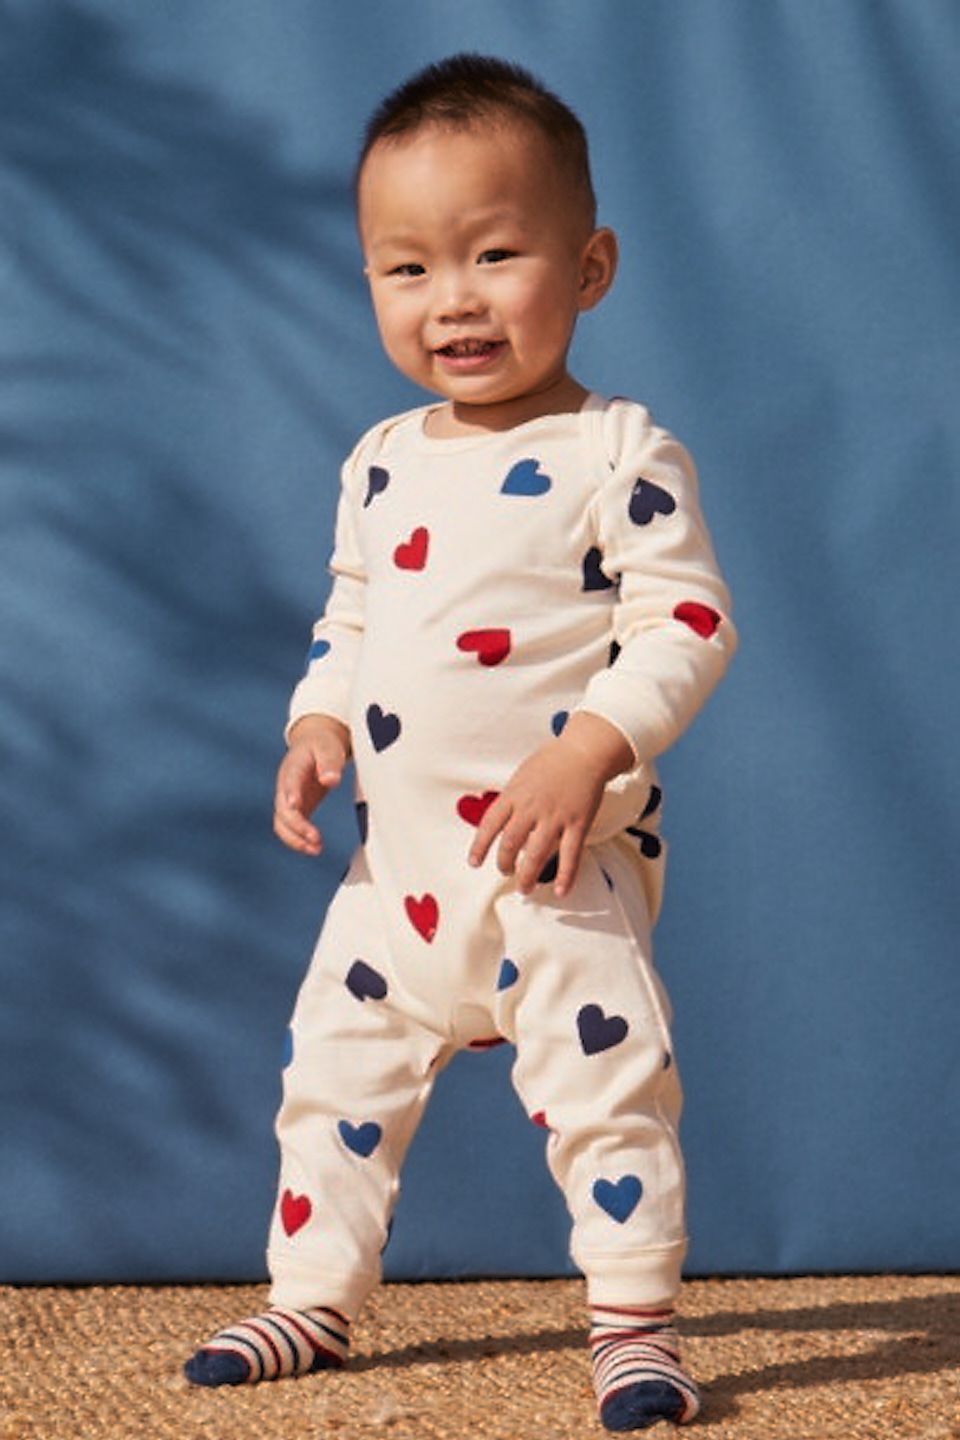 Heart Patterned Footless Cotton Sleepsuit - Parkette.